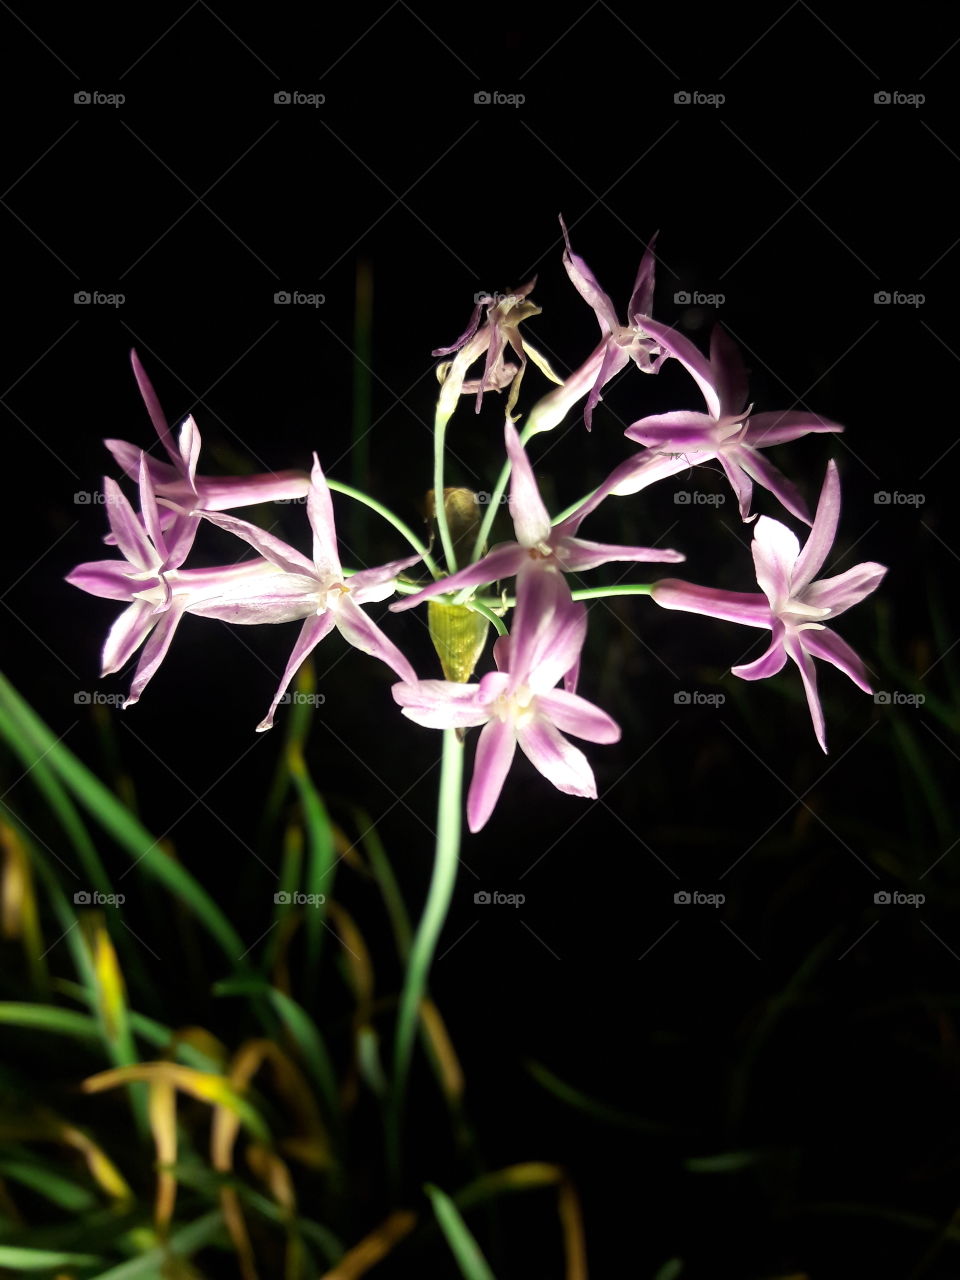 flower at night